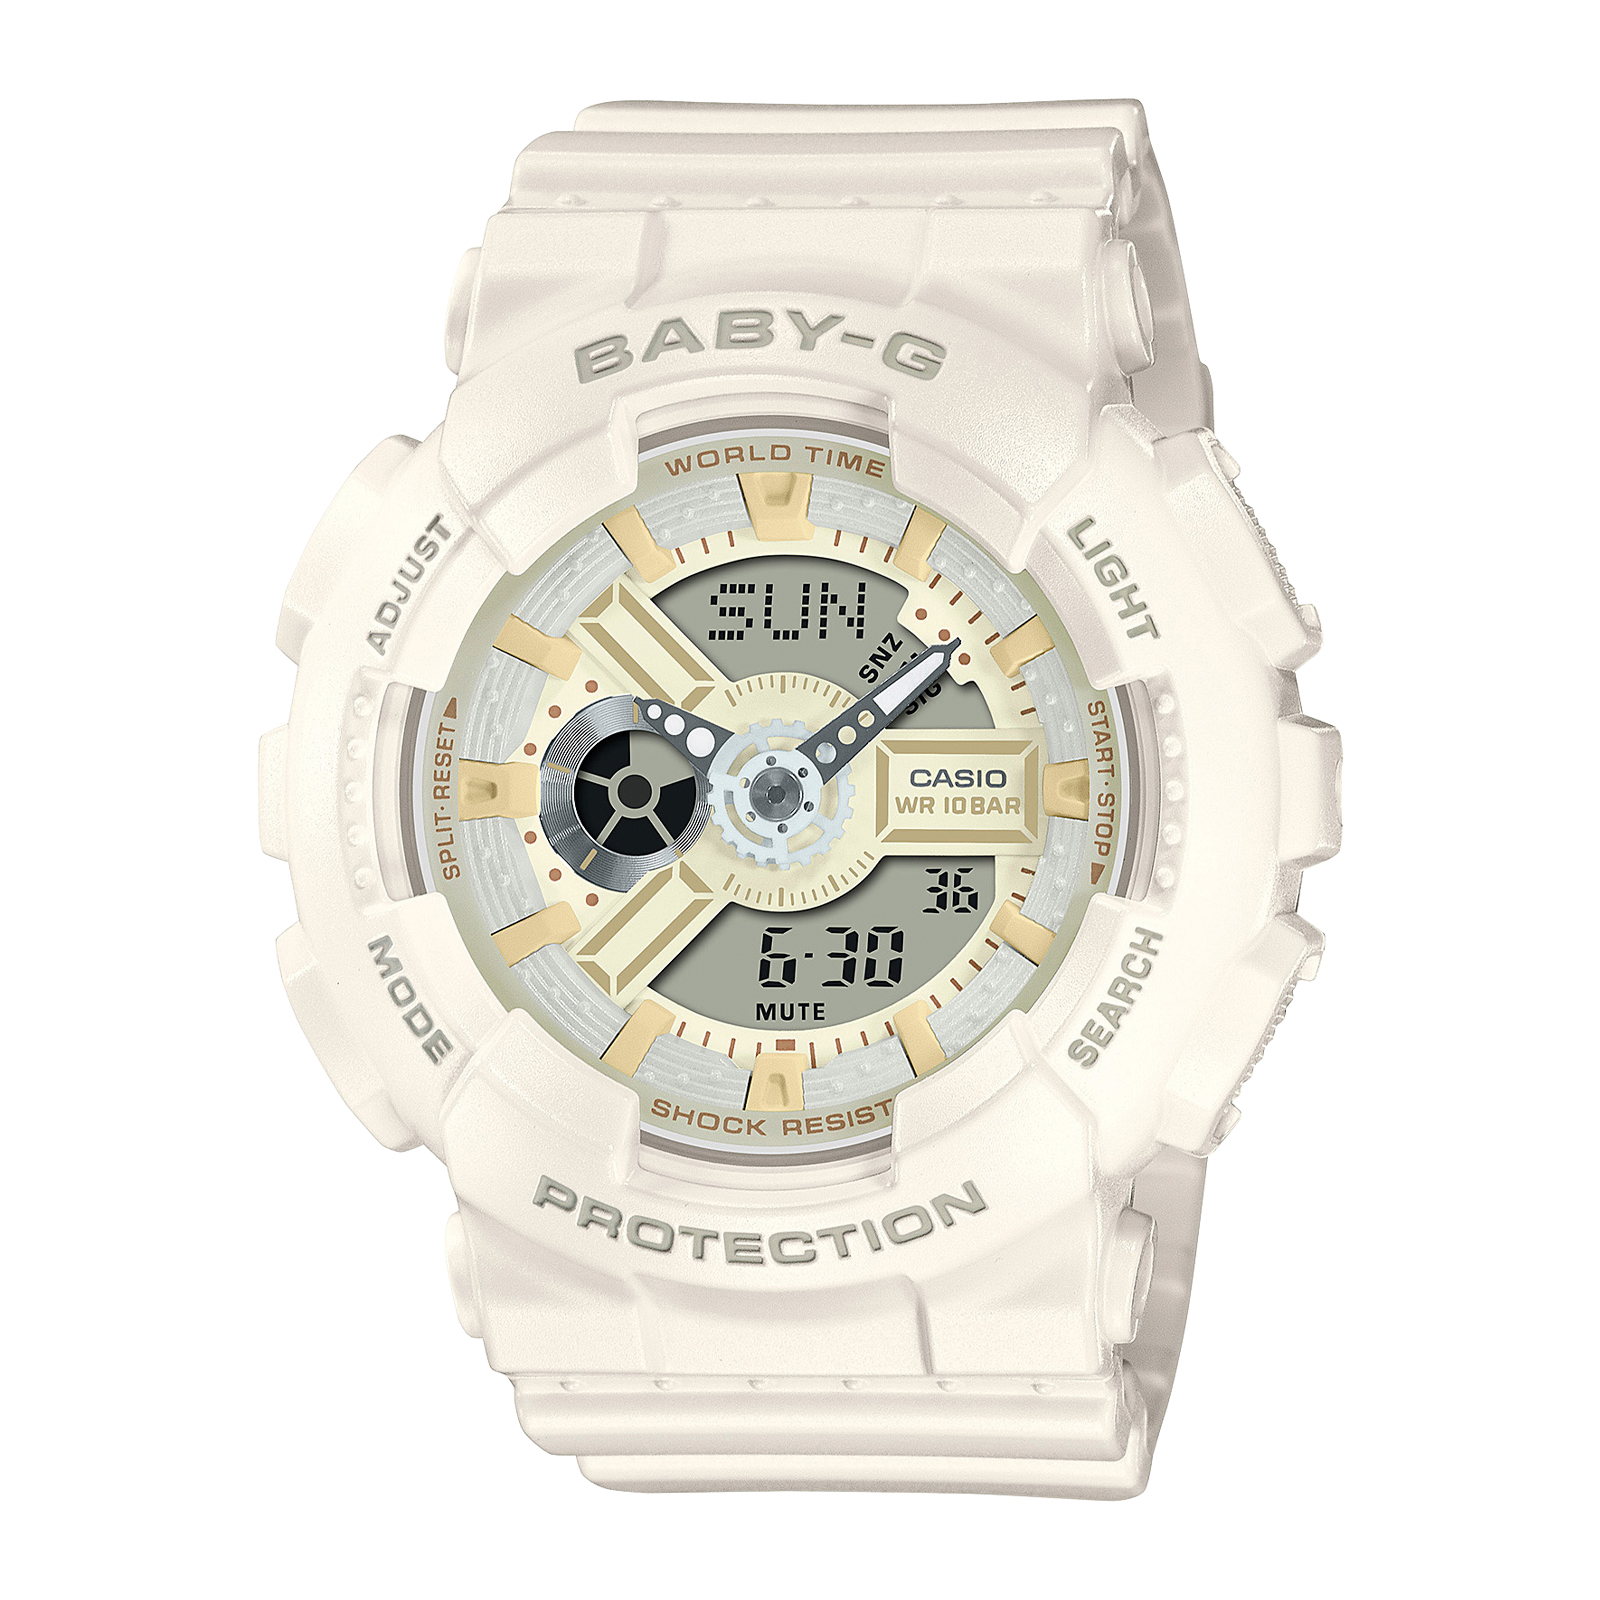 Reloj BABY-G BA-110XSW-7A Resina Mujer Blanco